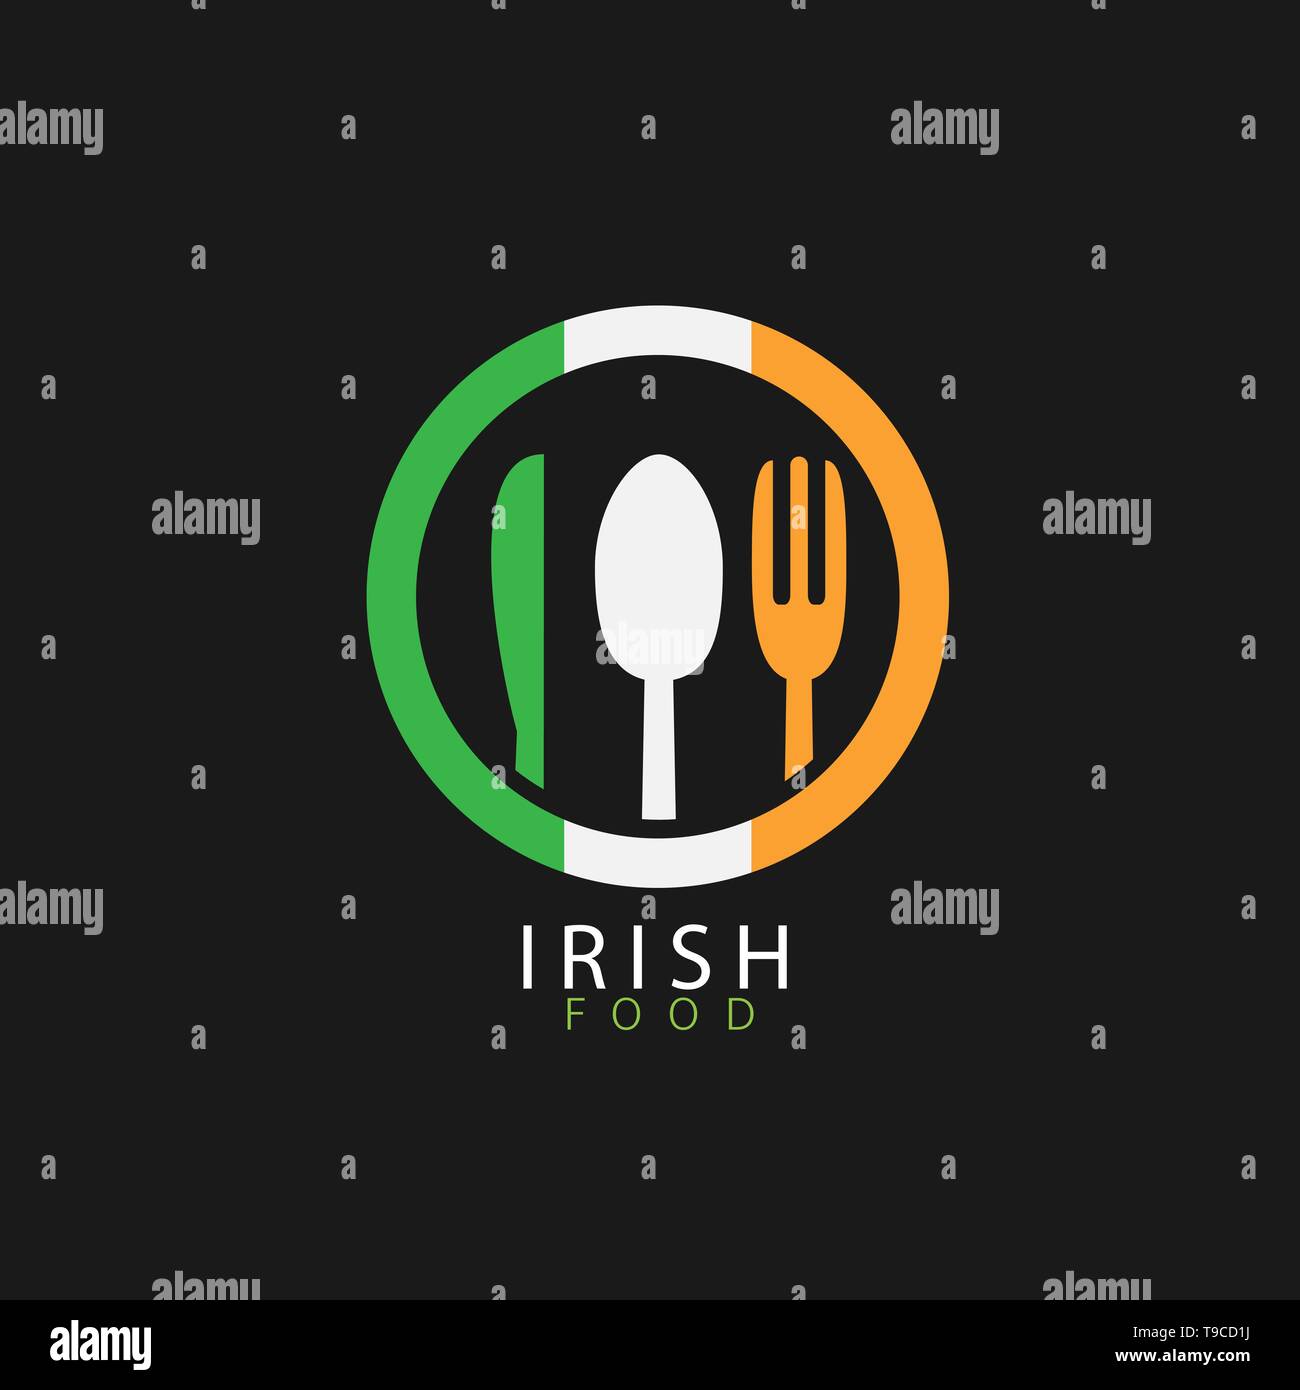 Irish food icon. Irish flag symbol Spoon fork and knife icons Stock Vector